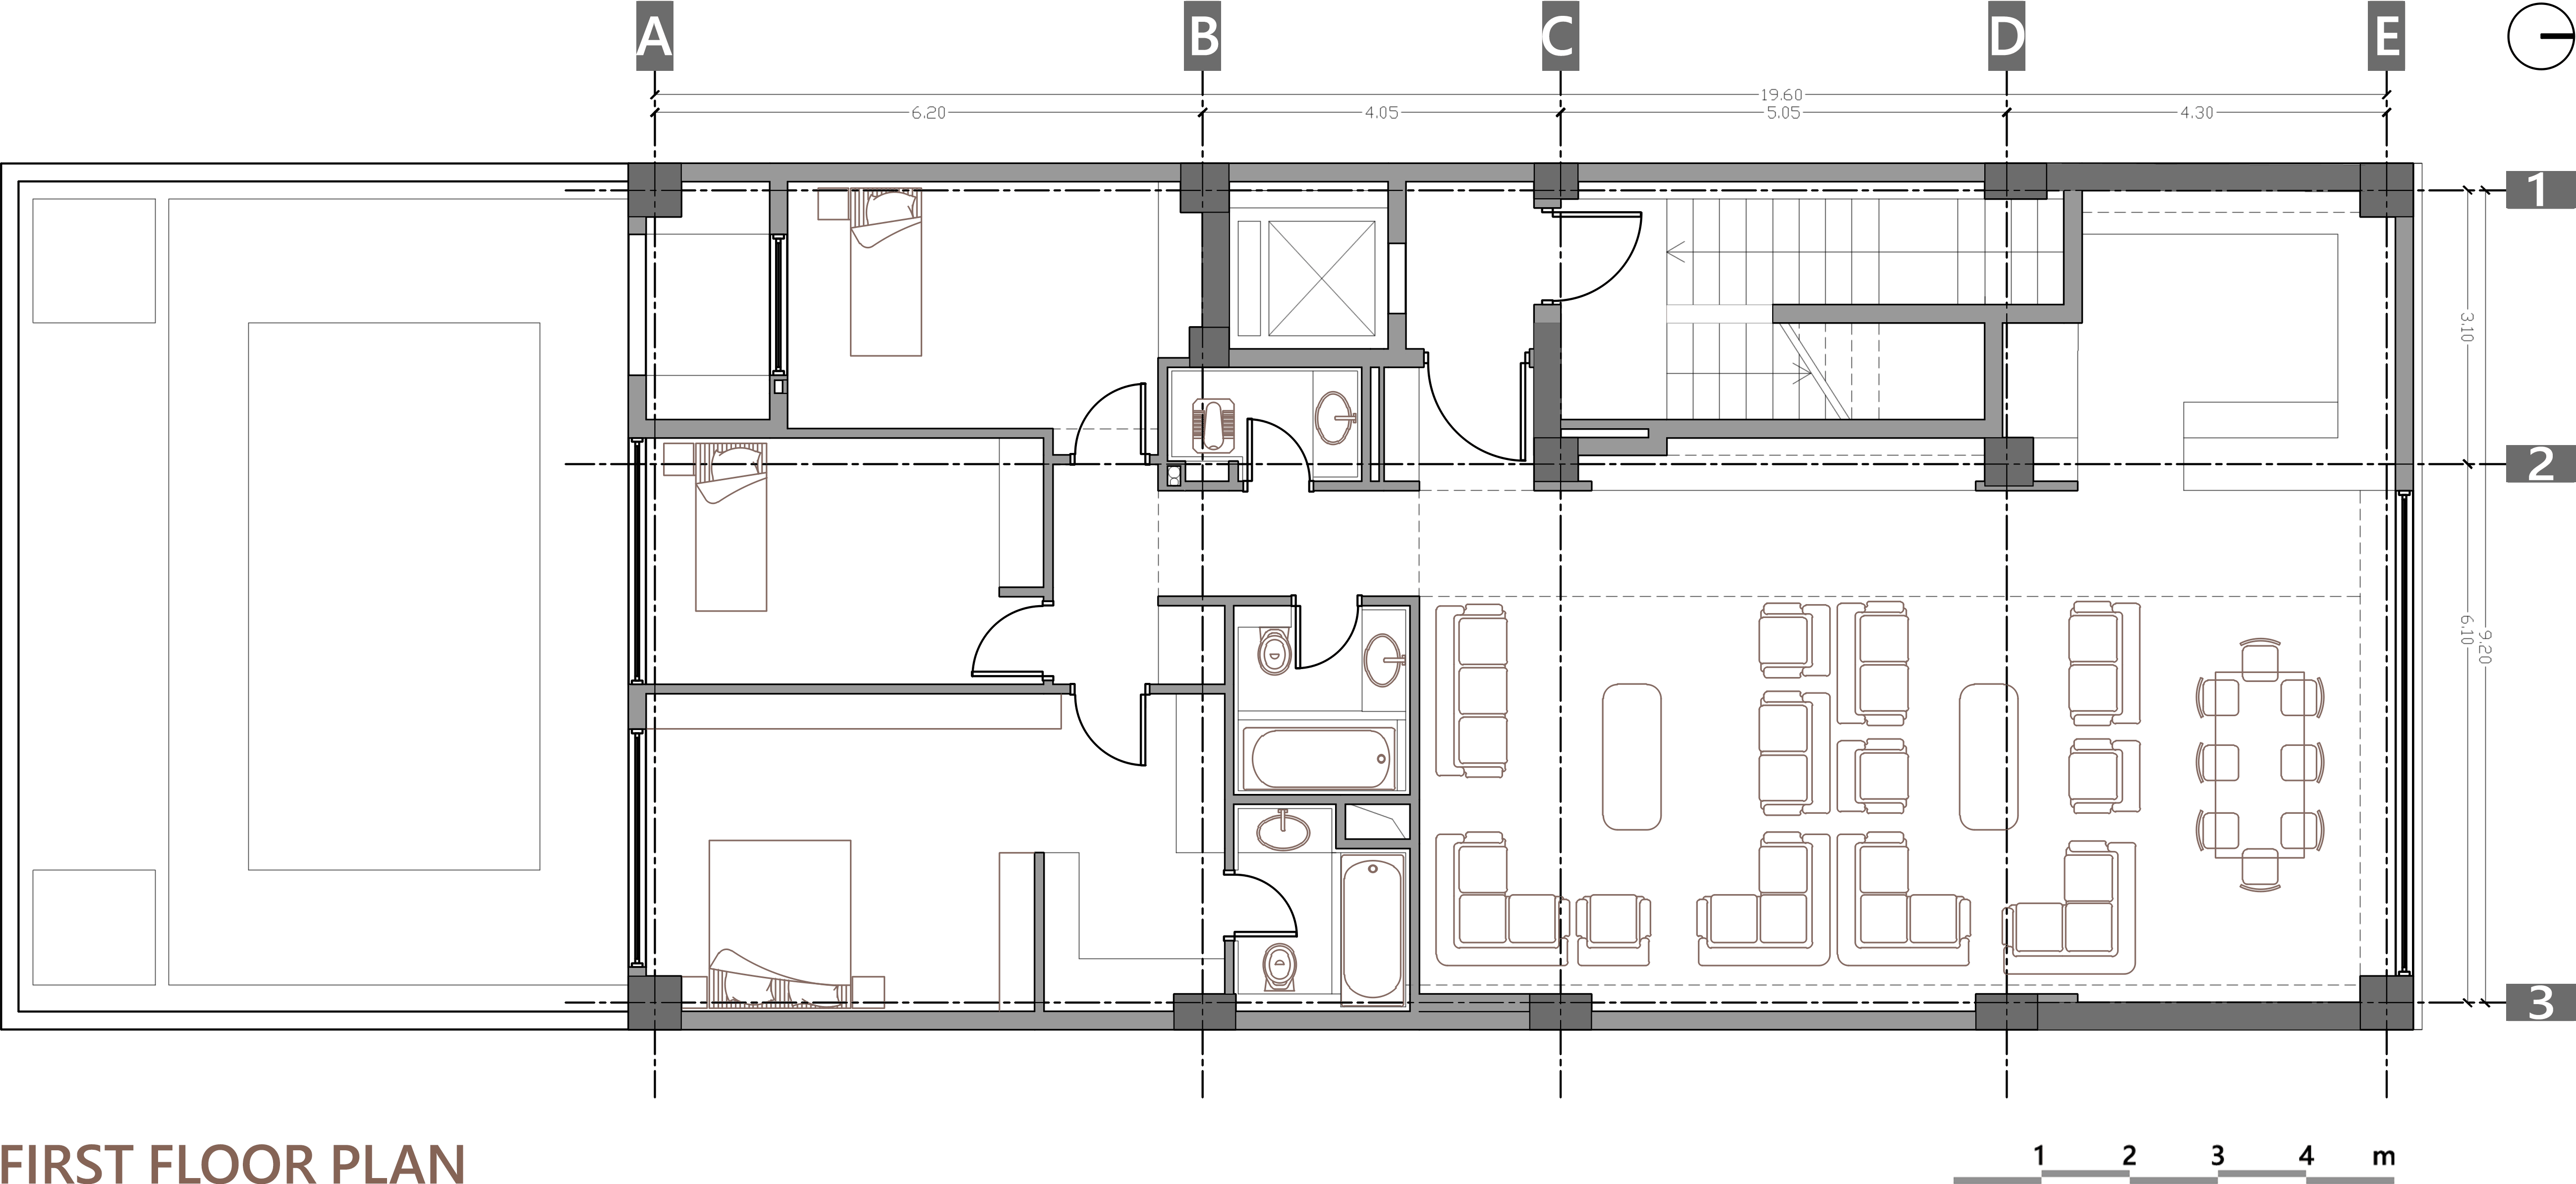 first floor plan, 93 st. residentail aratment